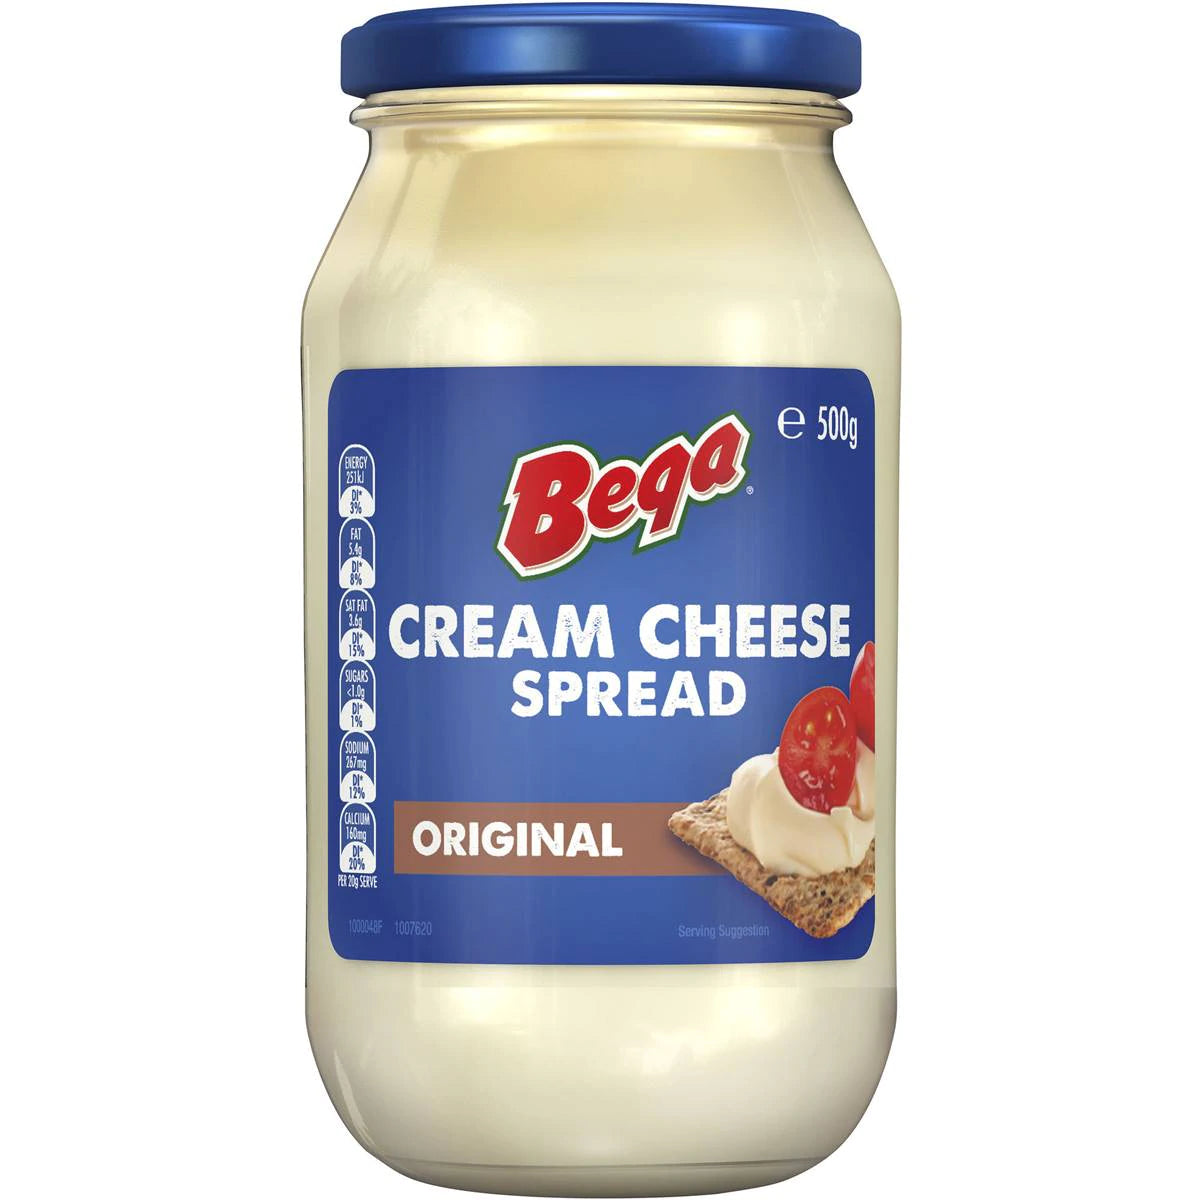 Bega Cream Cheese Spread 500g